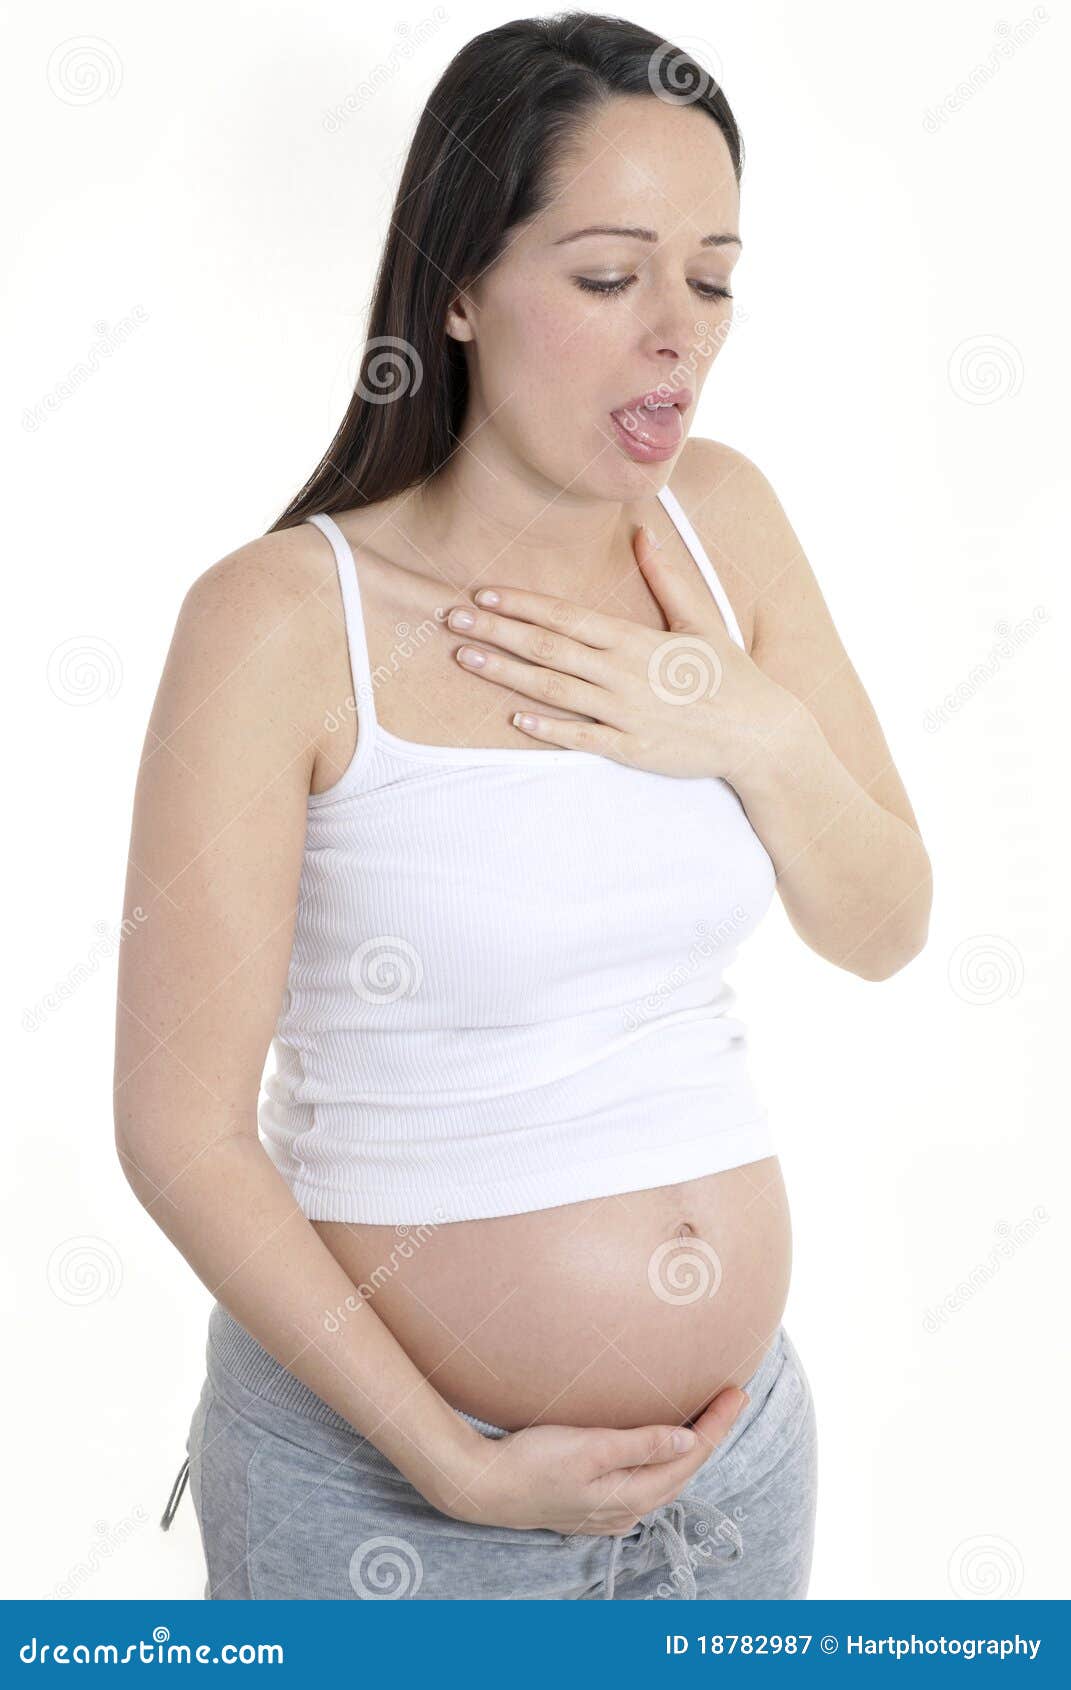 pregnancy morning sickness